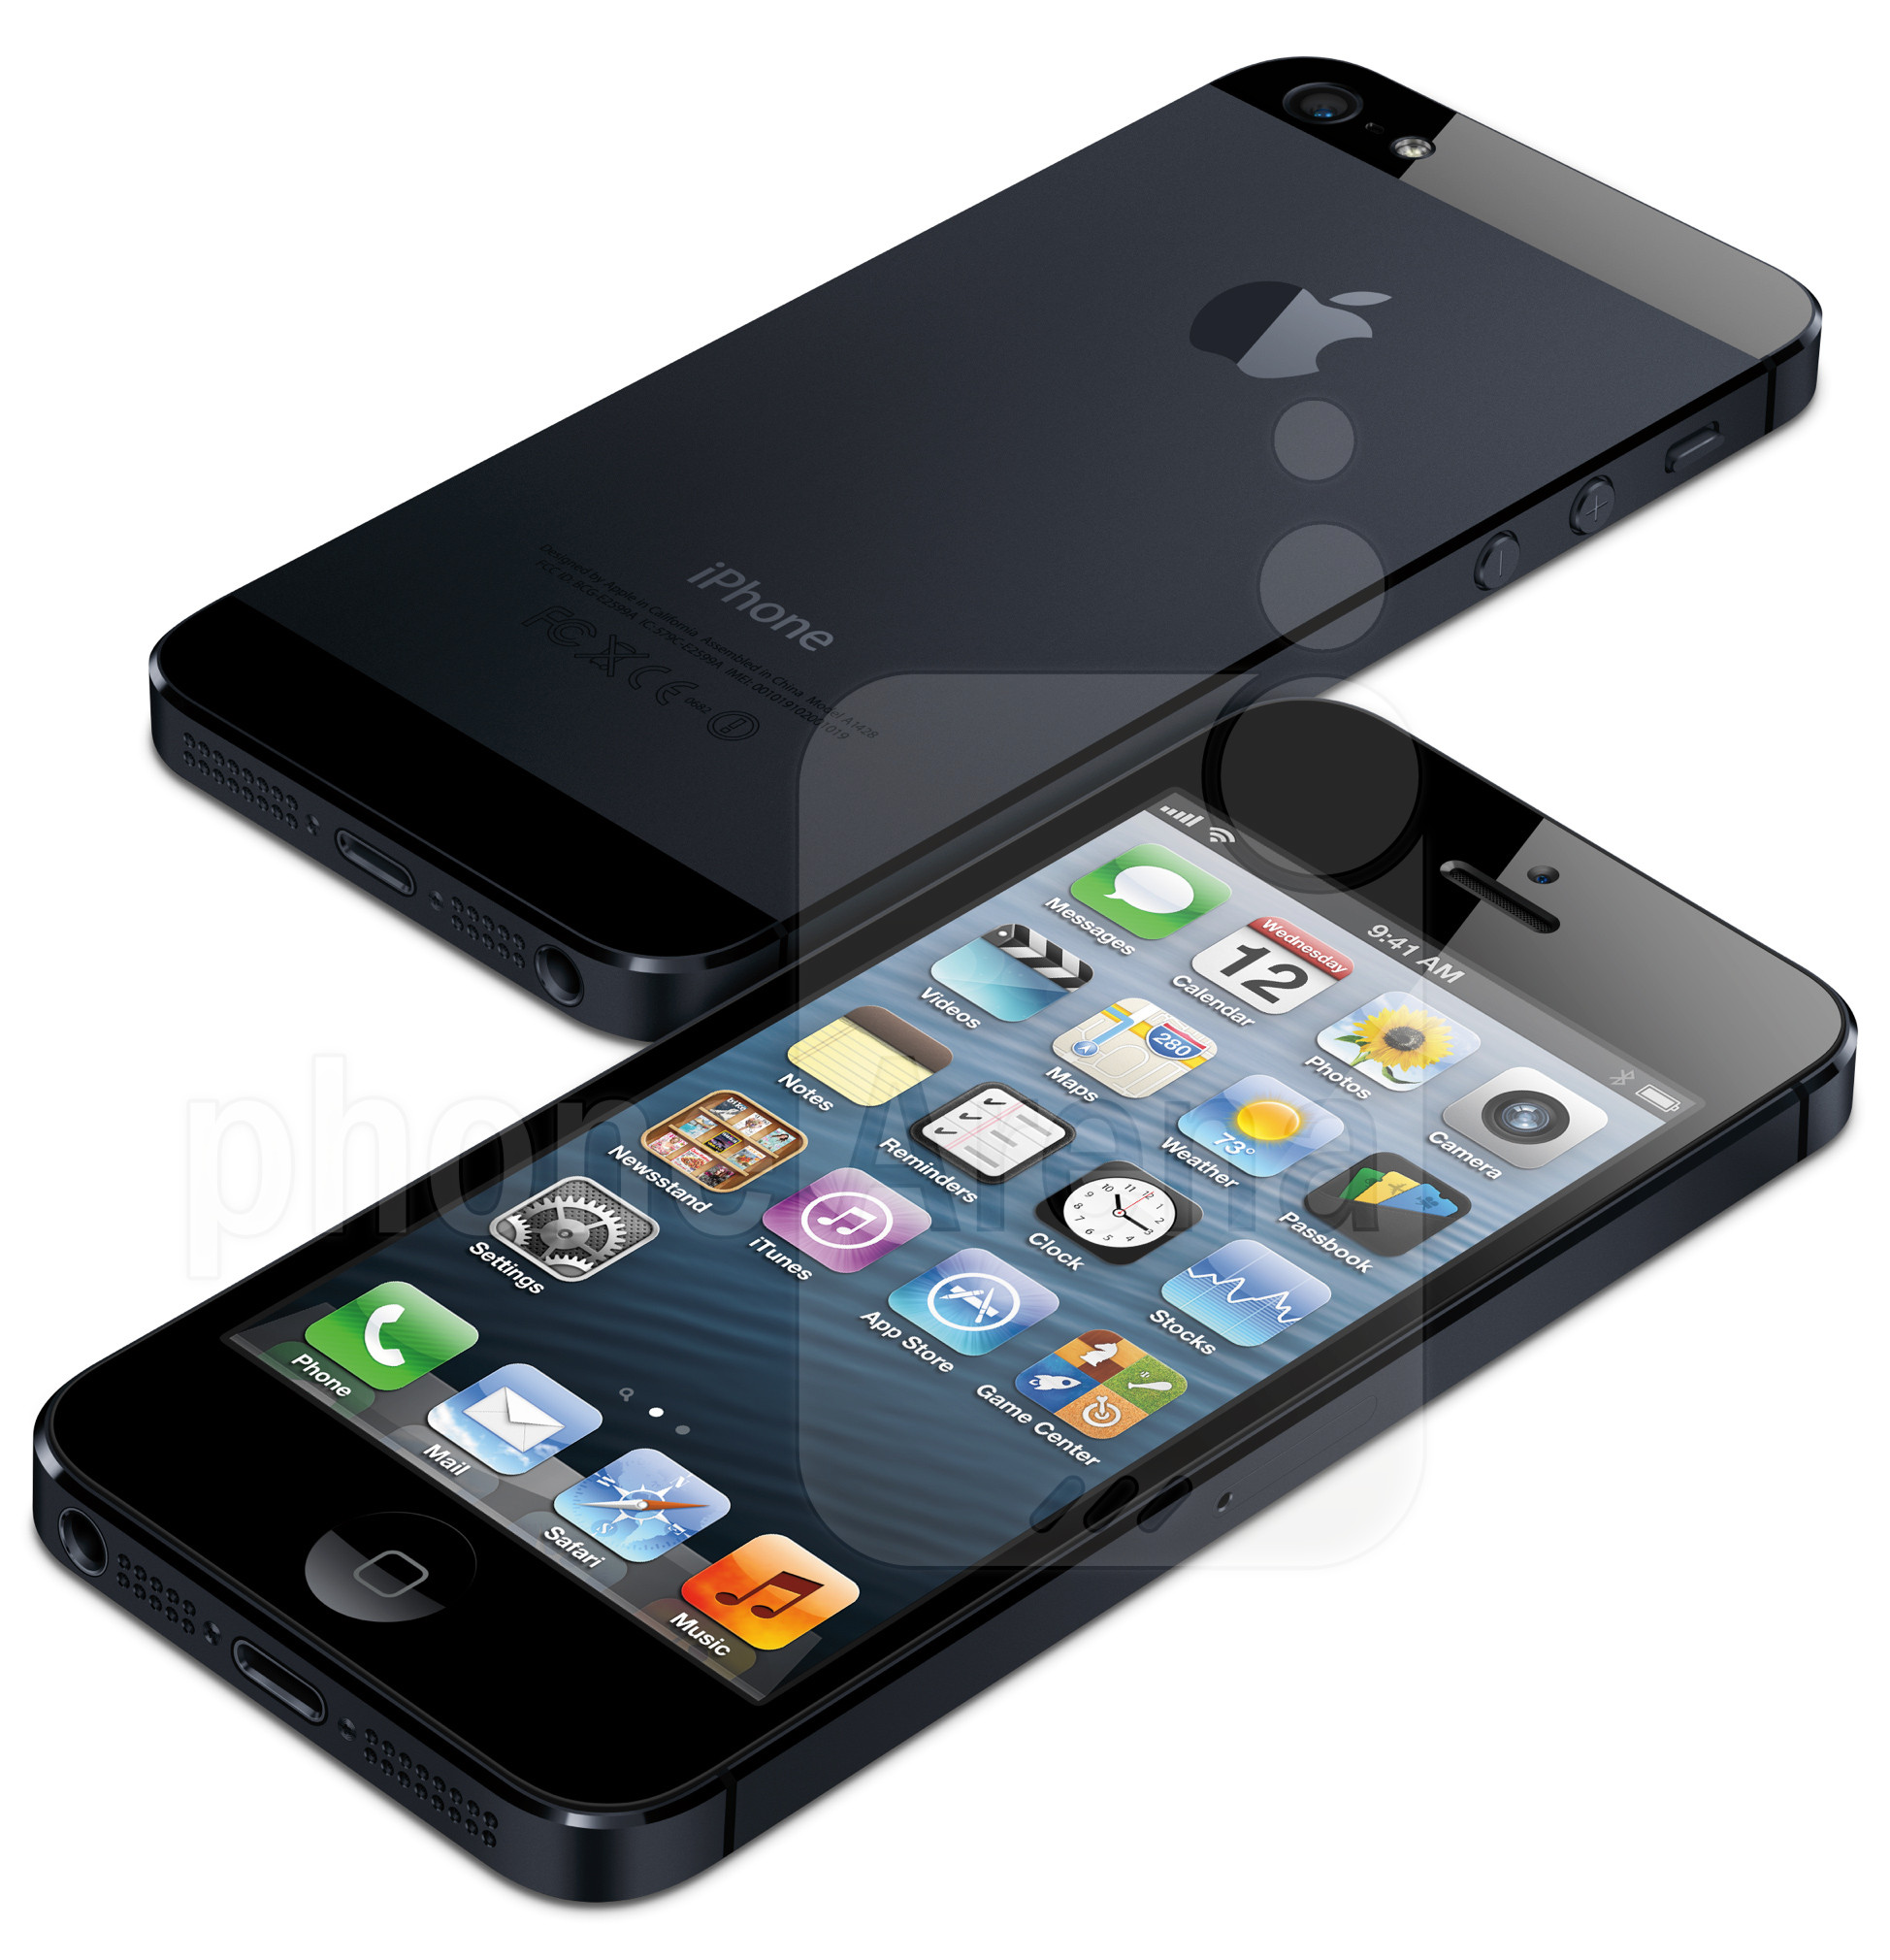 Apple iPhone 5 2